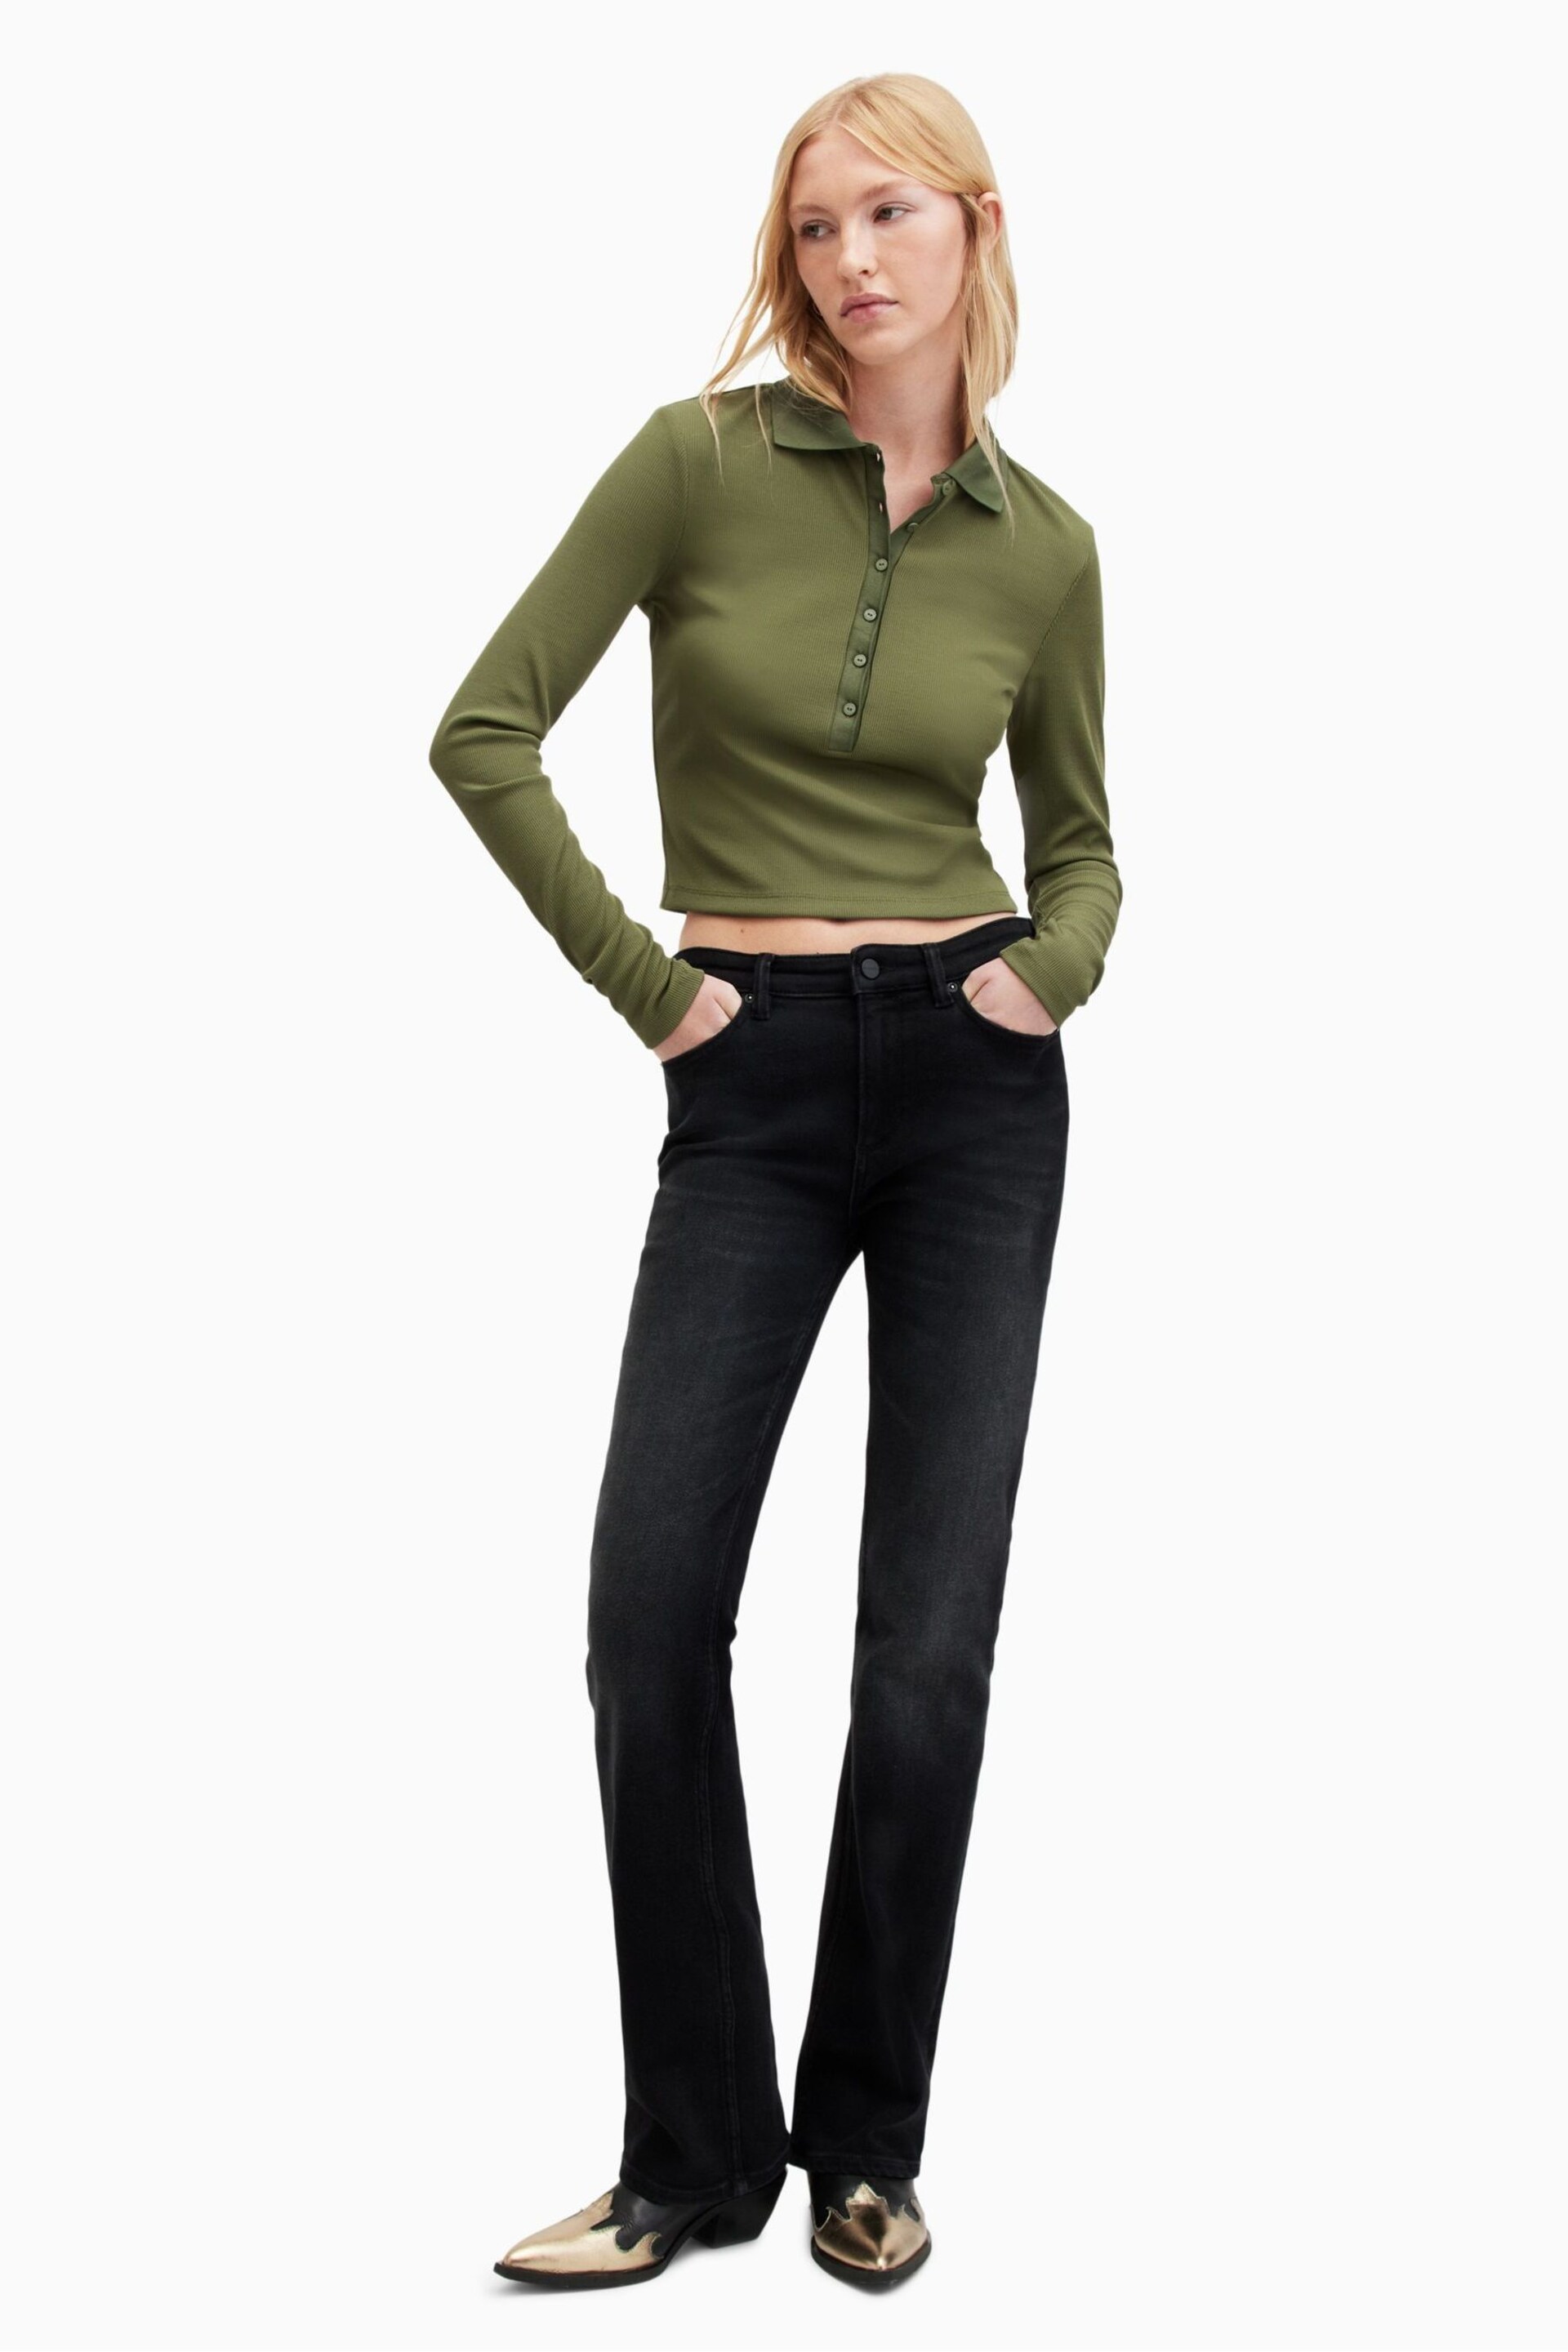 AllSaints Green Hallie Long Sleeve Polo Shirt - Image 3 of 8